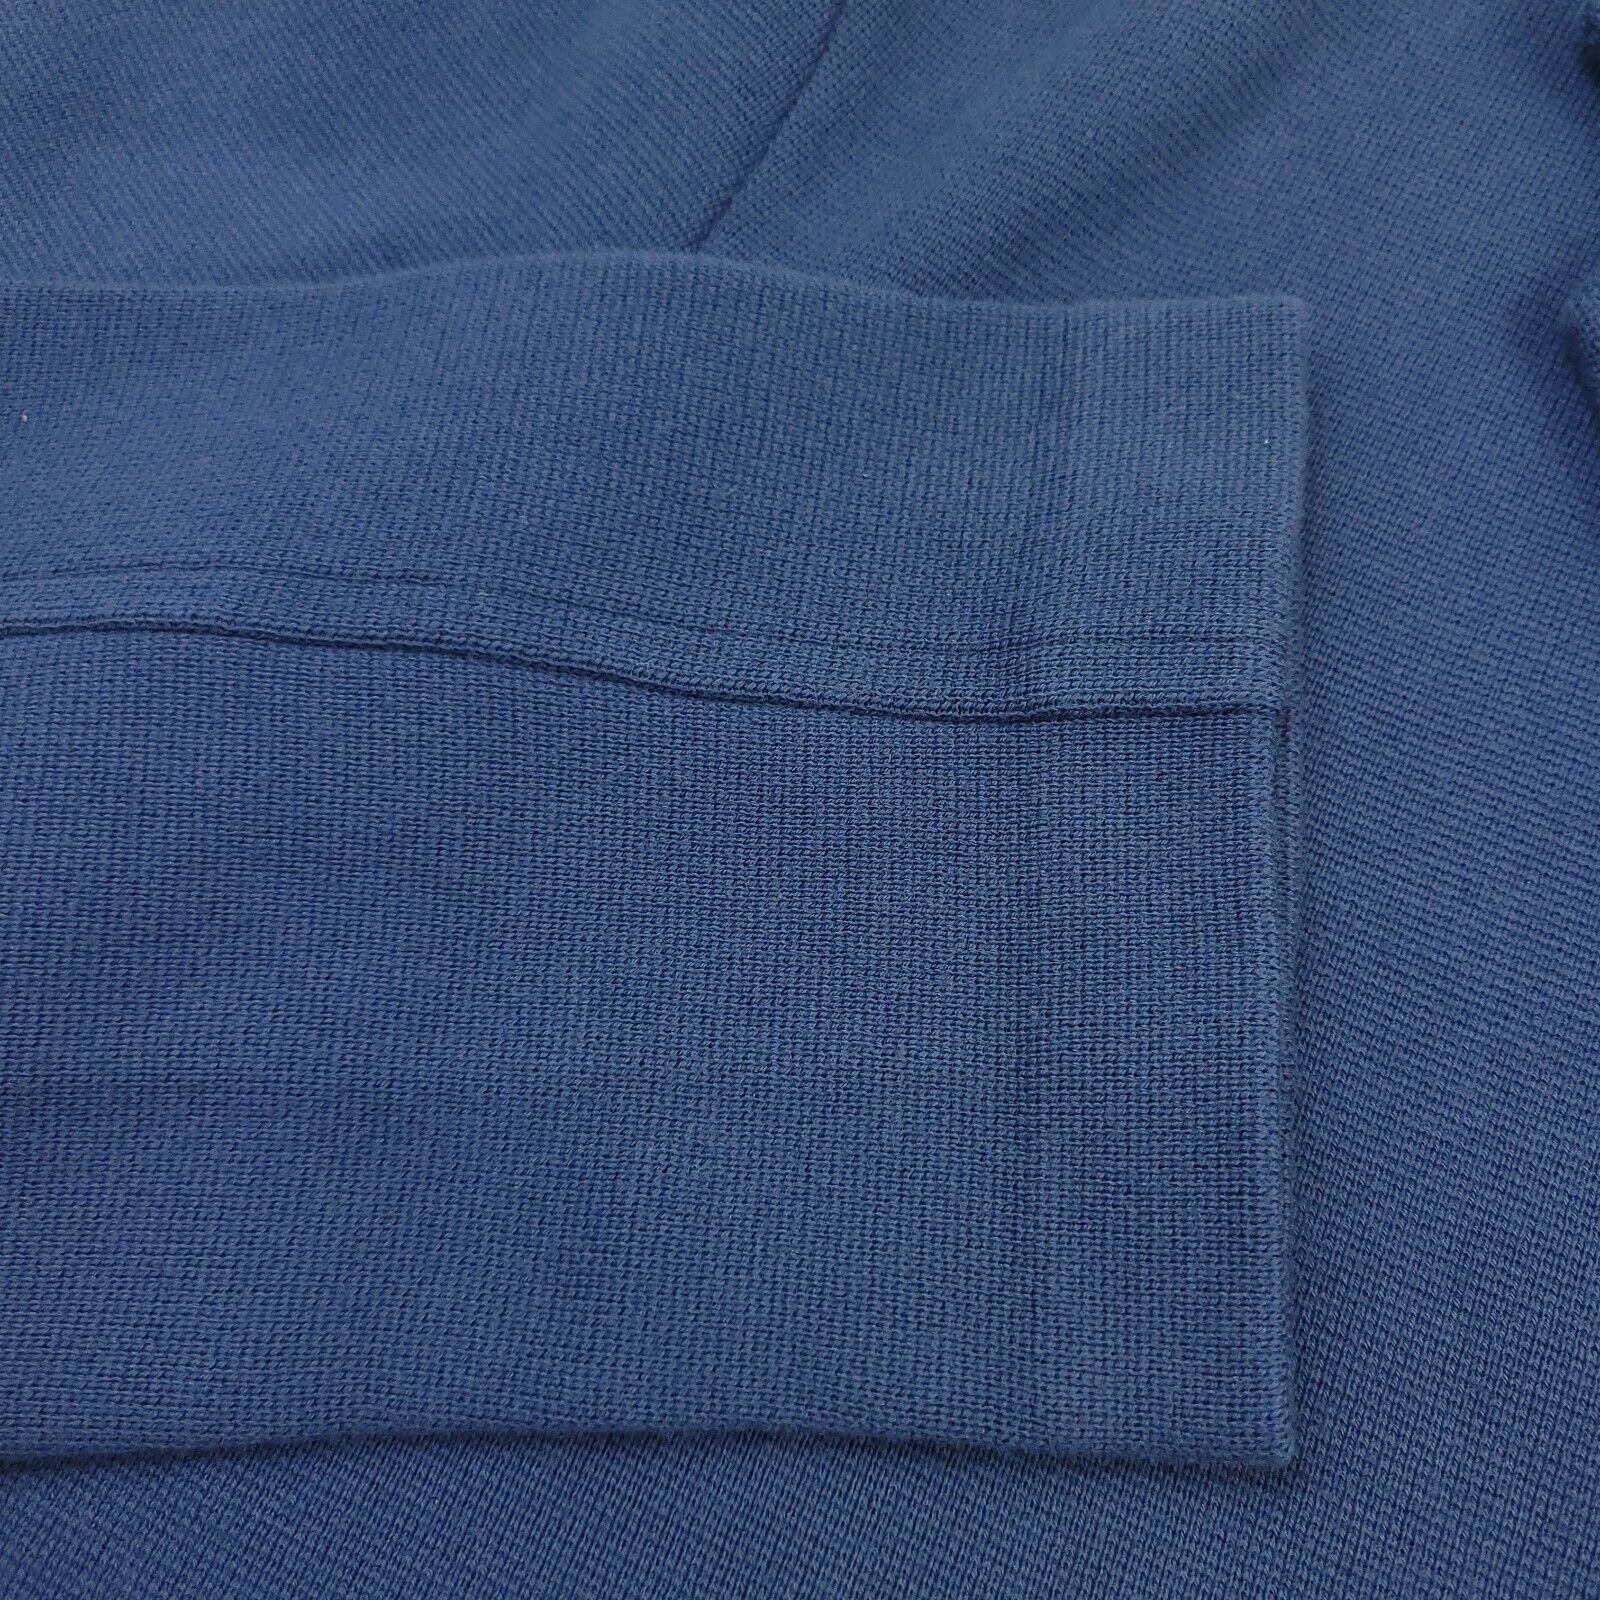 $795 Z Zenga Milano Cotton Cardigan Jersey Jacket Mens Size Small Solid Blue